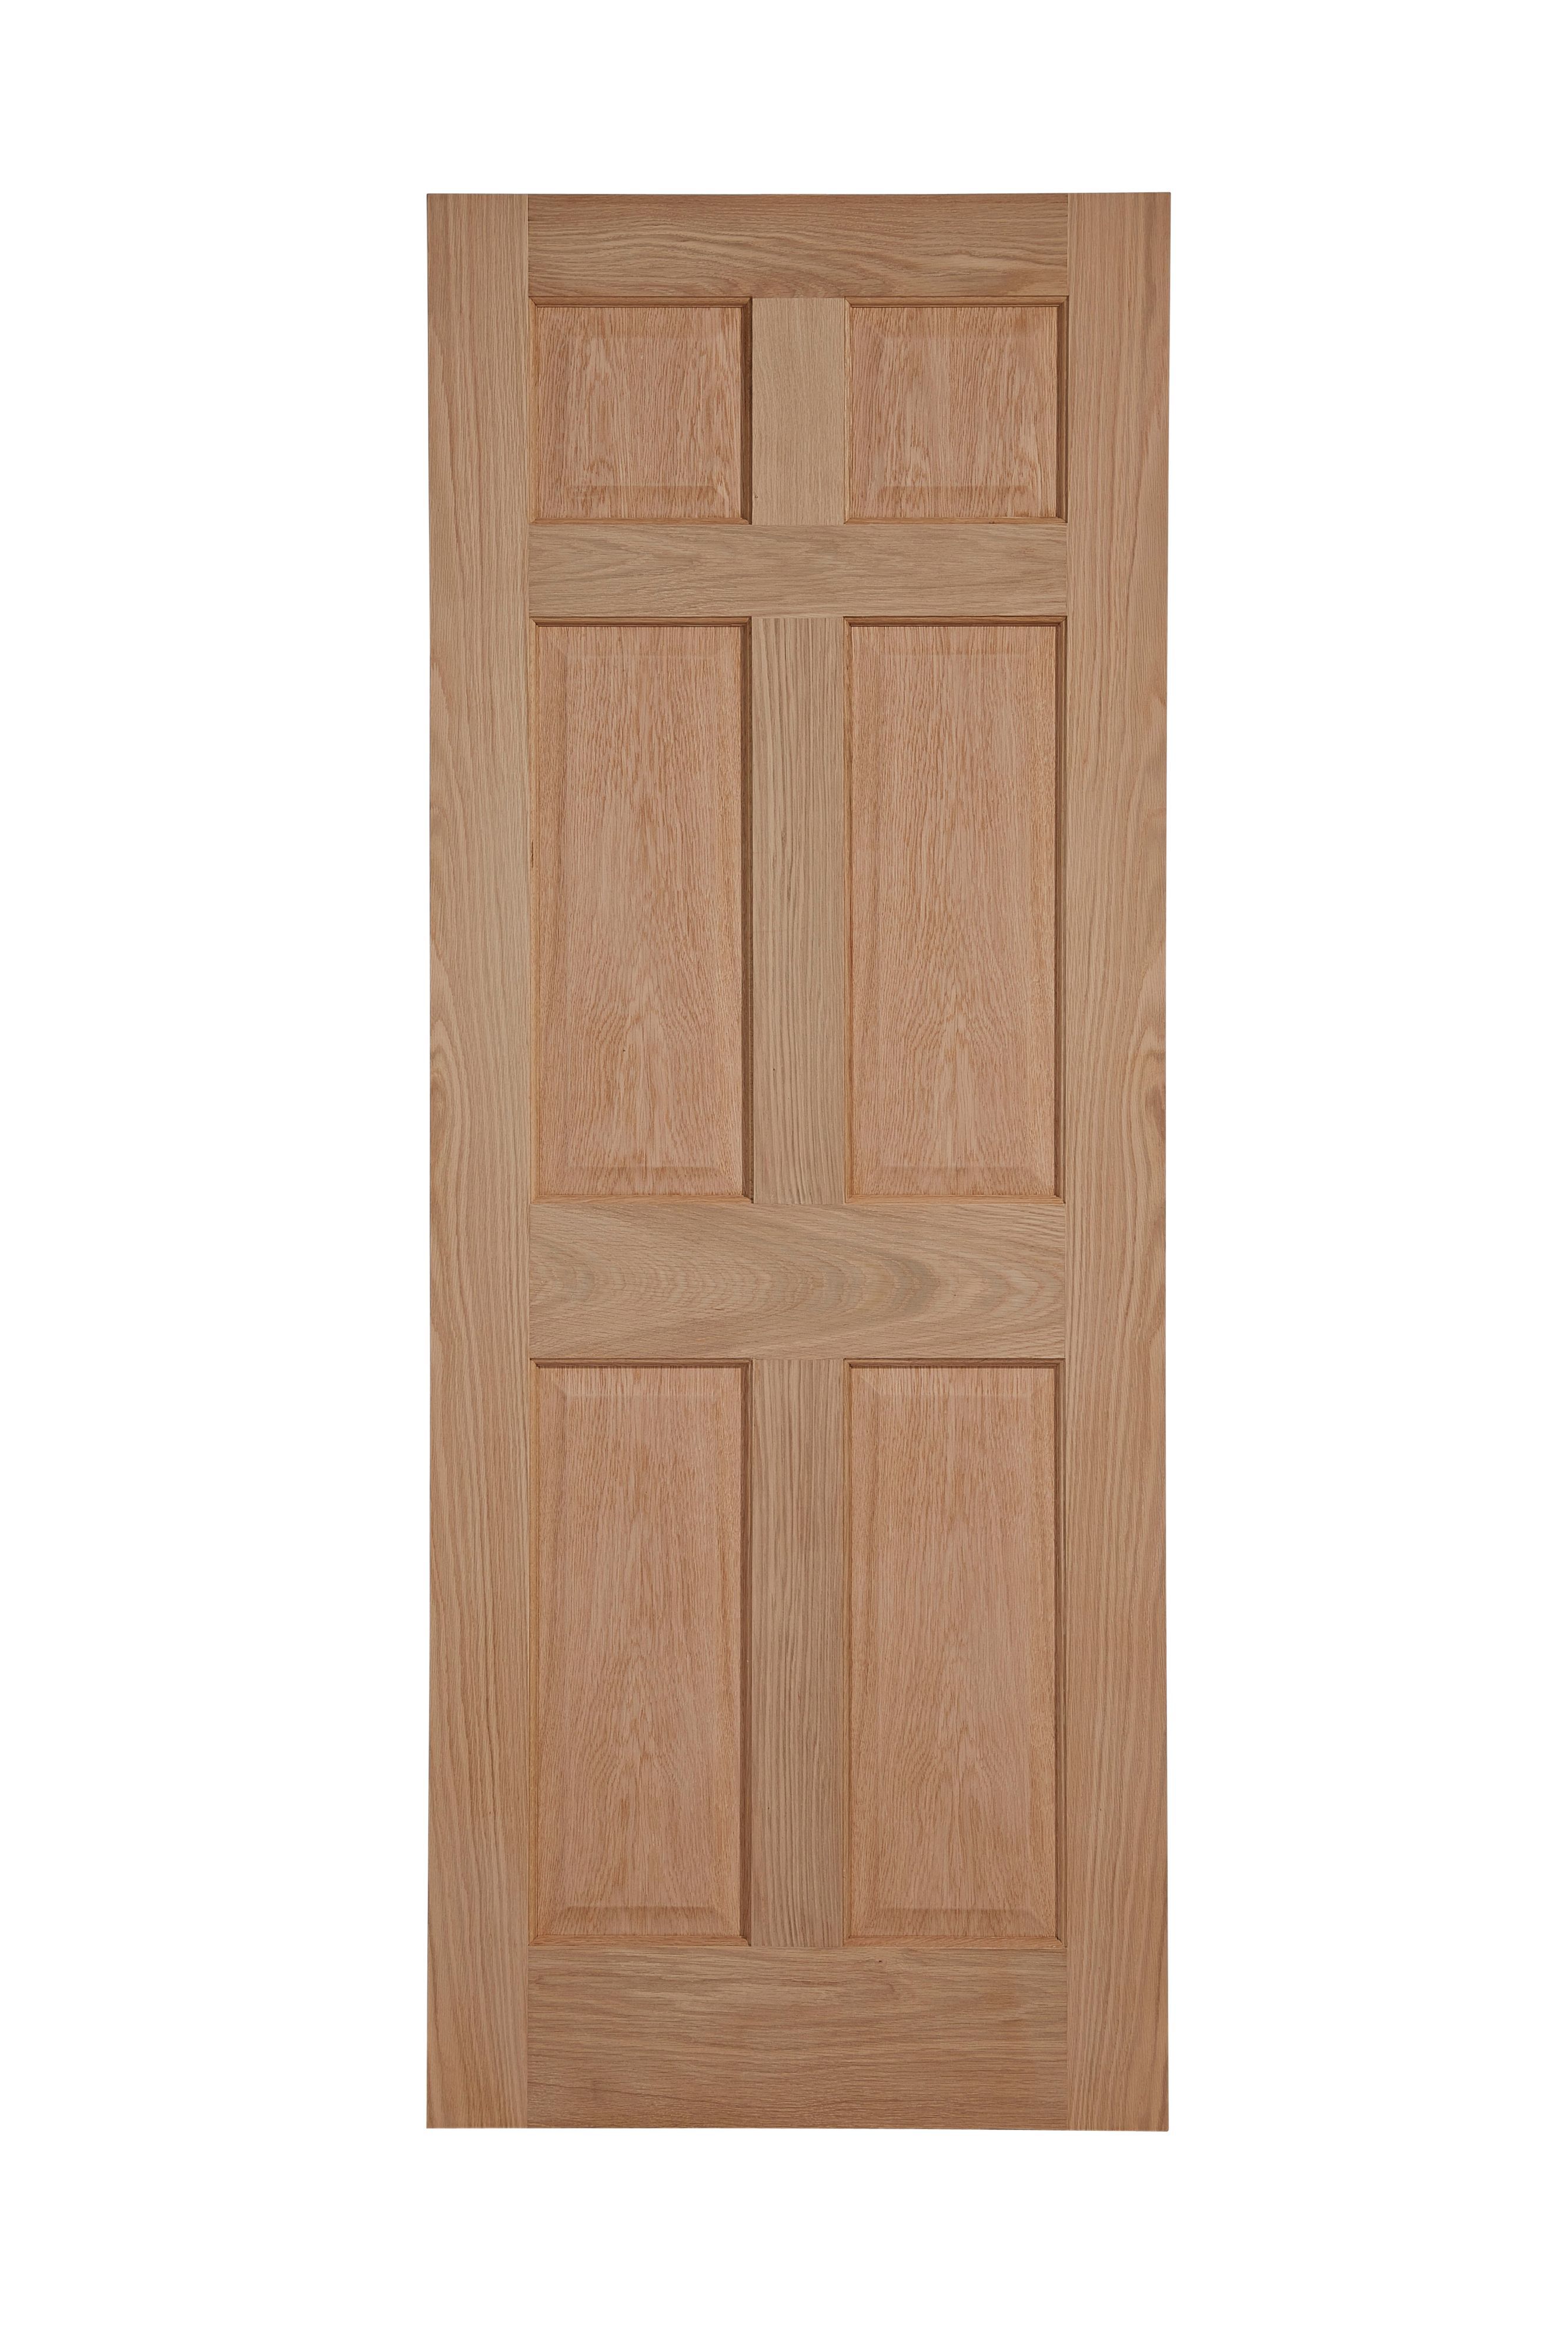 6 Panel Oak Veneer Lh Rh Internal Door H 1981mm W 762mm Departments Diy At B Q